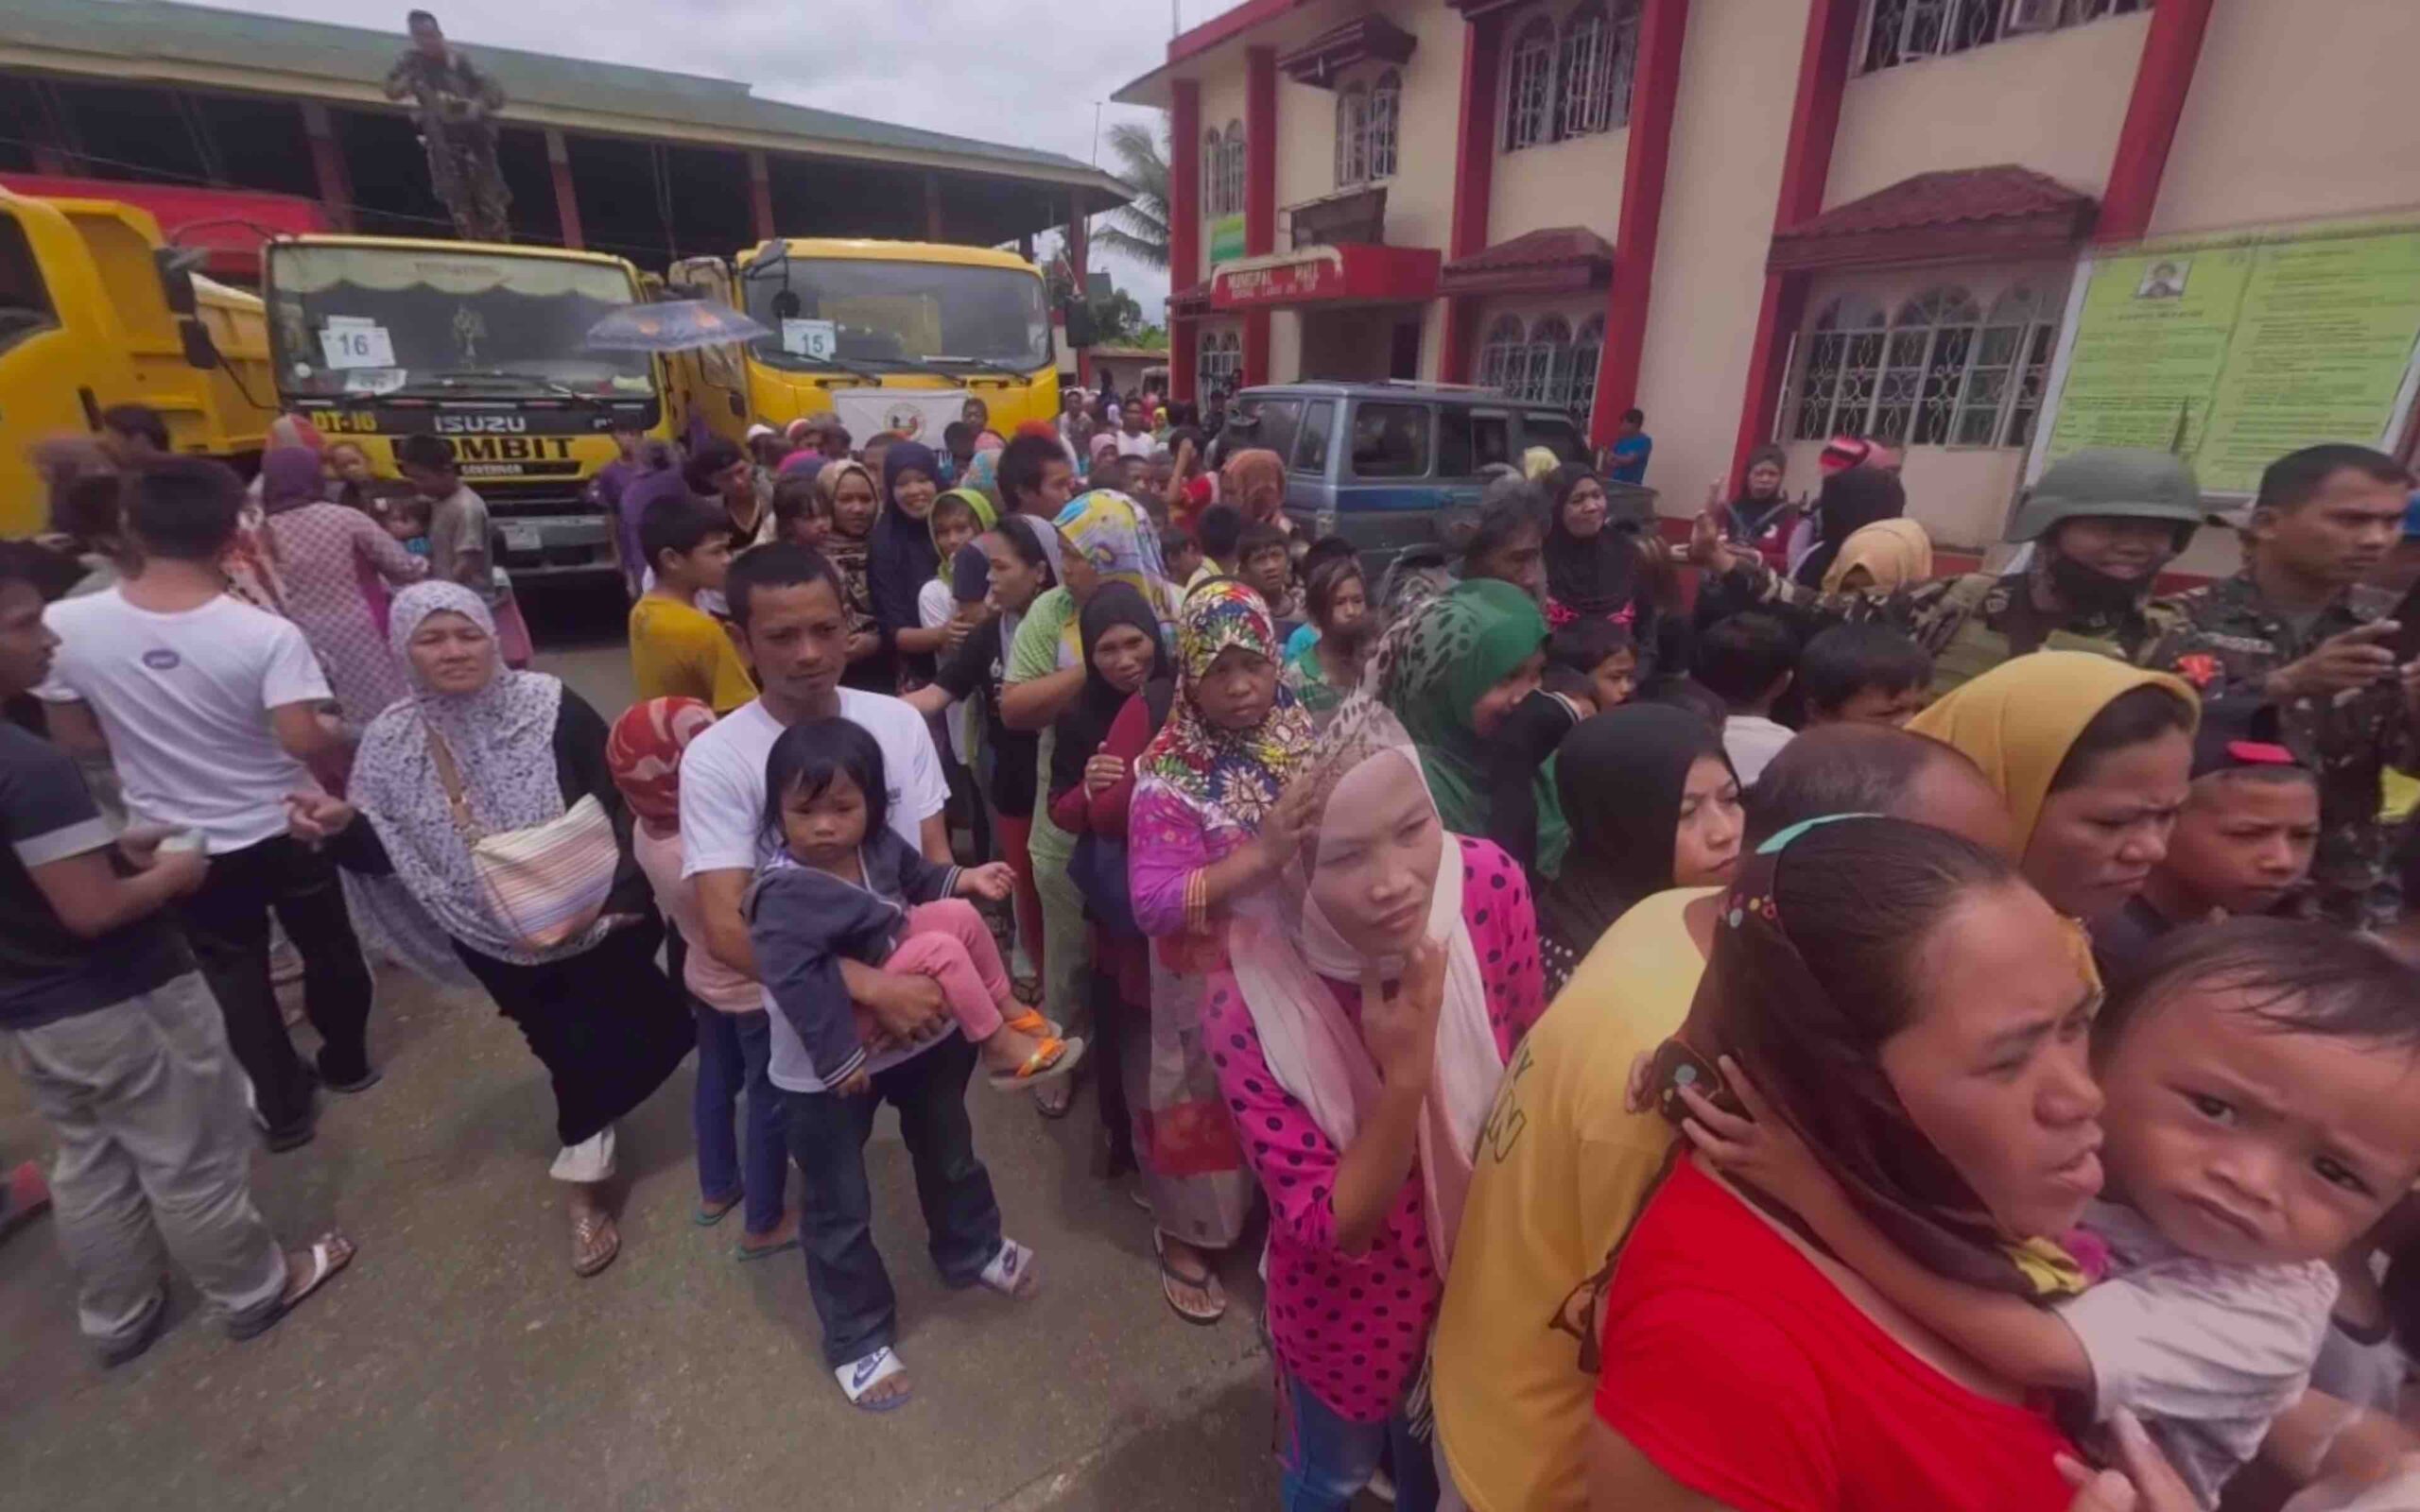 WATCH IN 360º: The Marawi humanitarian crisis